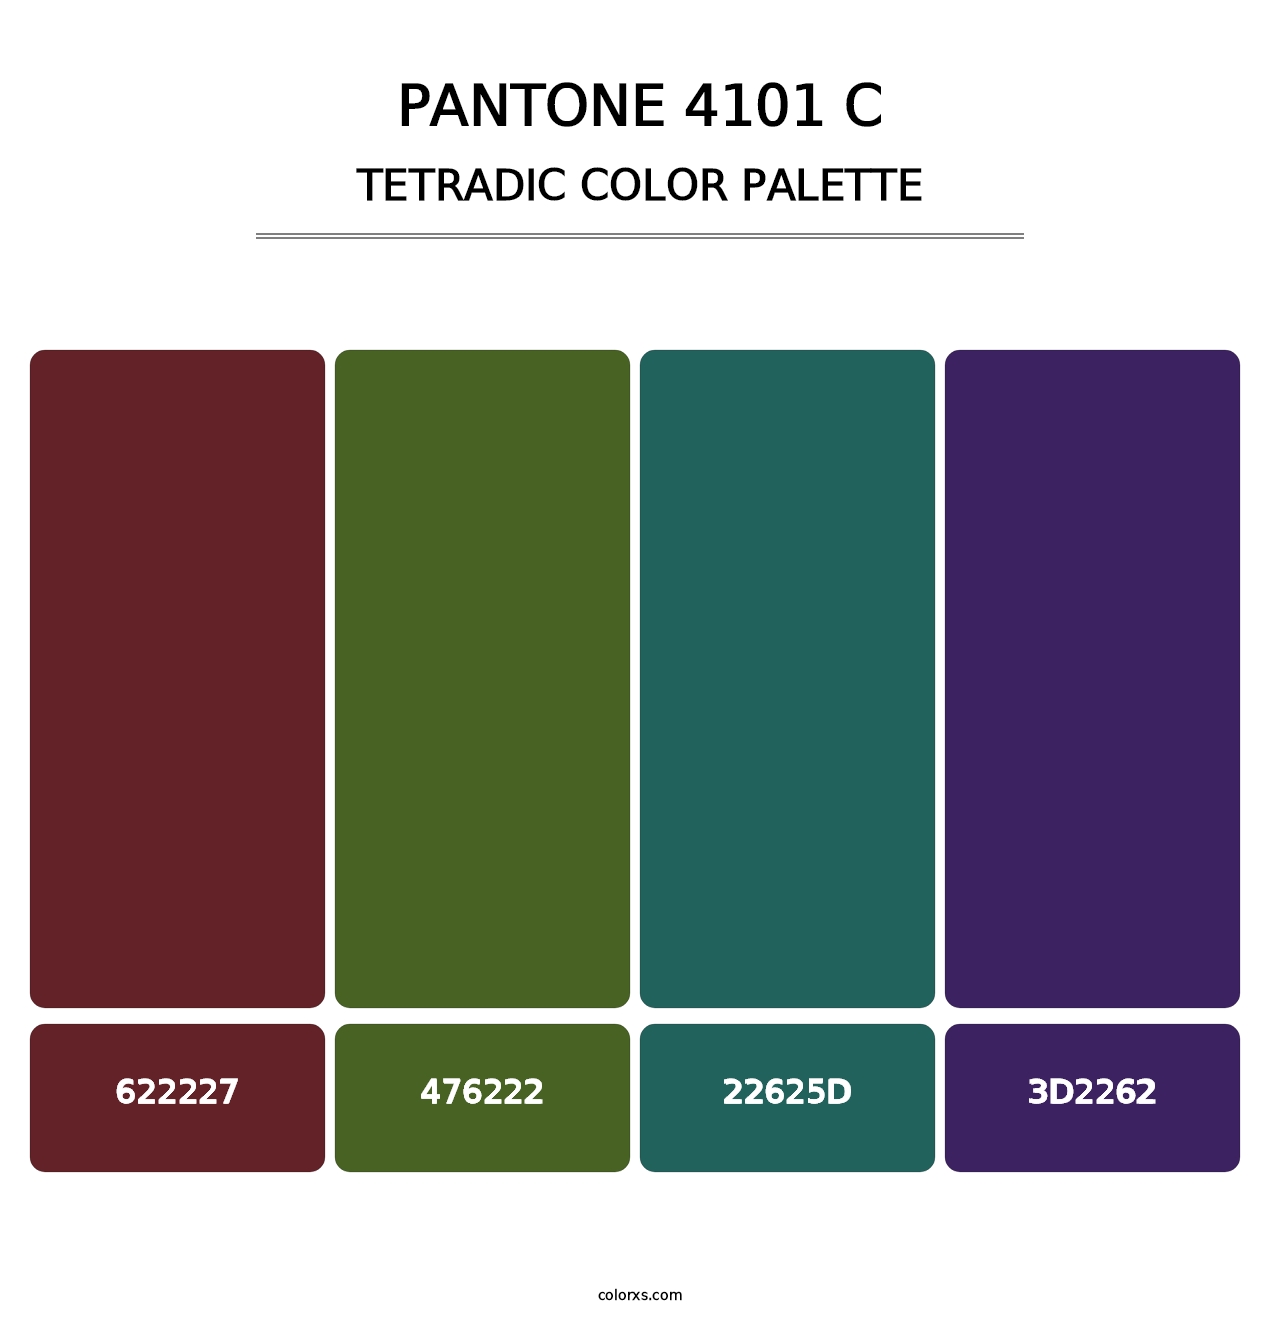 PANTONE 4101 C - Tetradic Color Palette